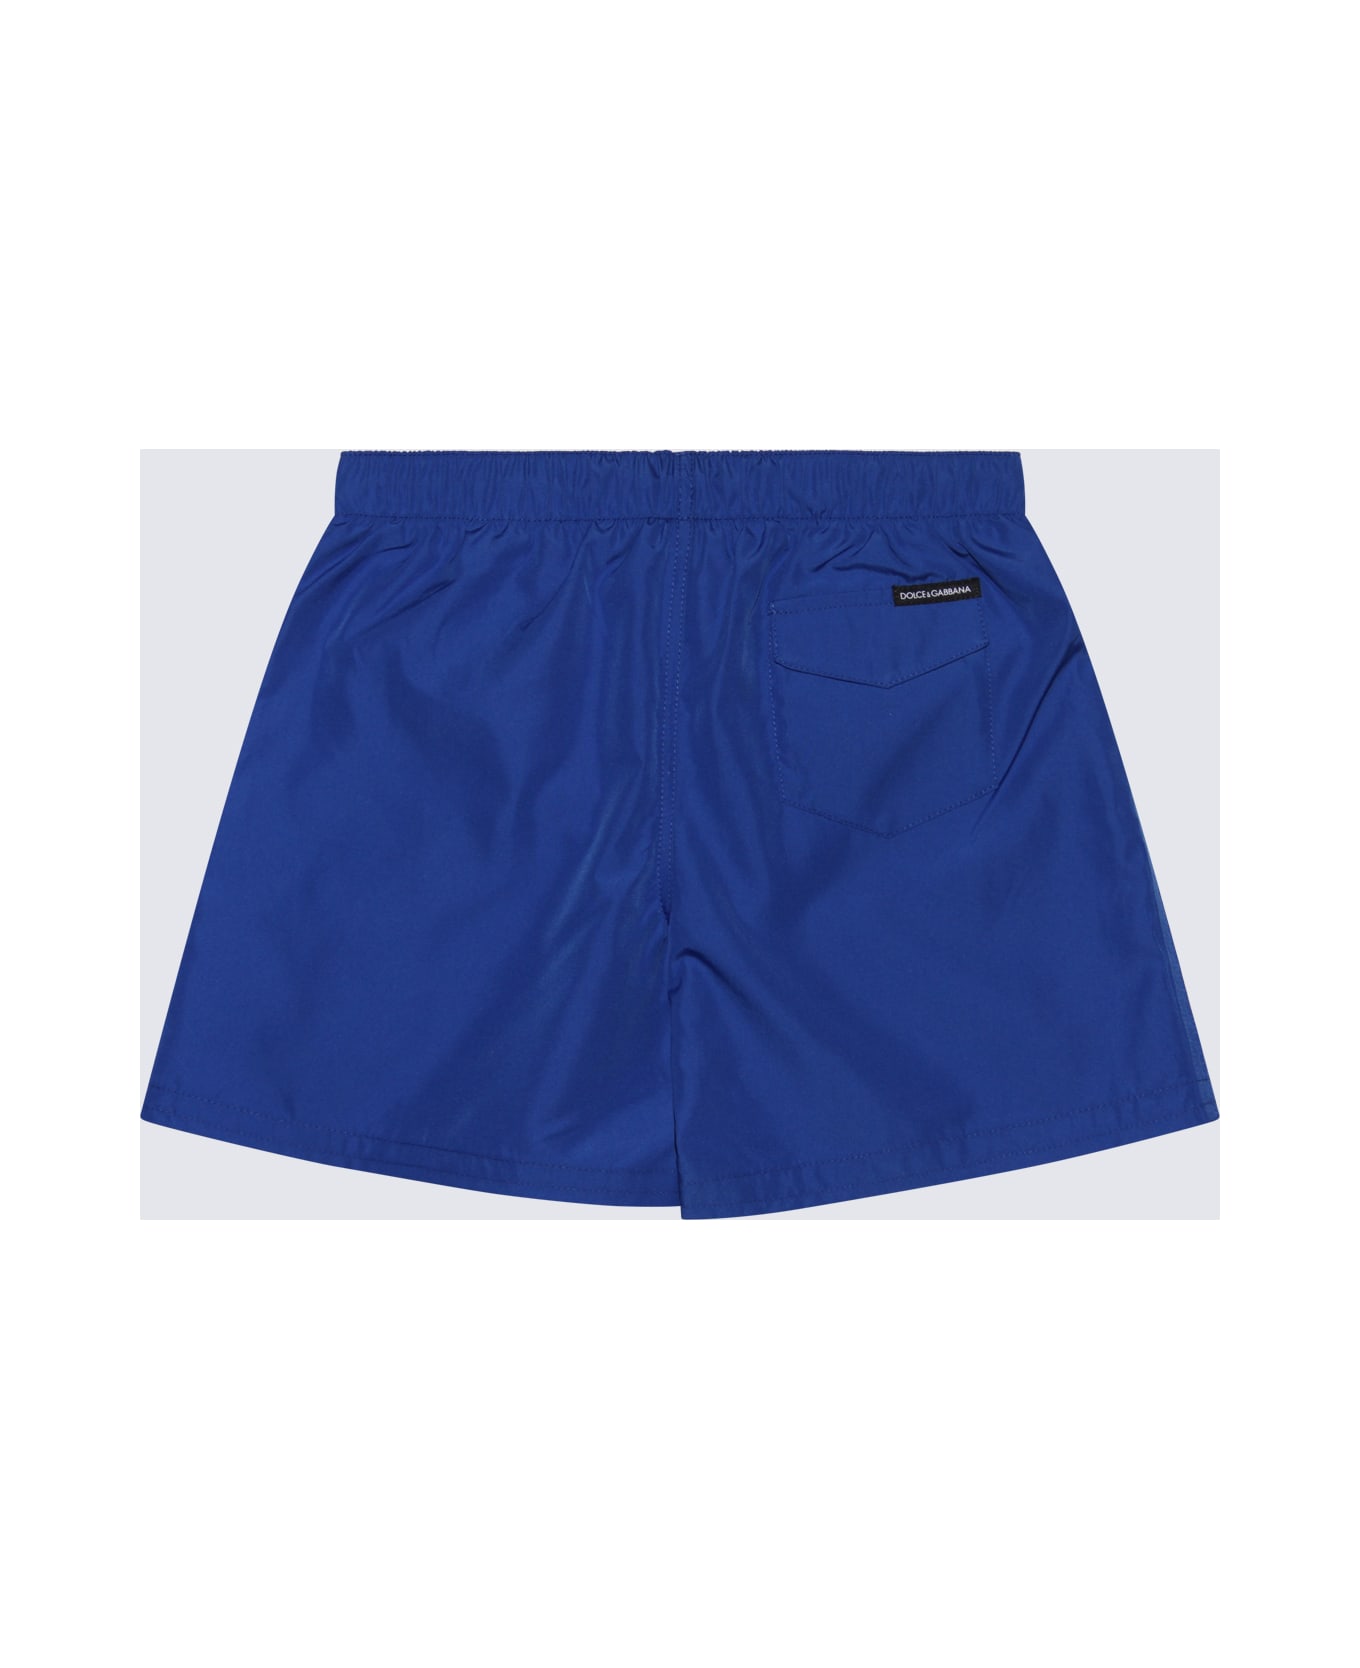 Dolce & Gabbana Blue Swim Shorts - BLUETTE MEDIO 水着